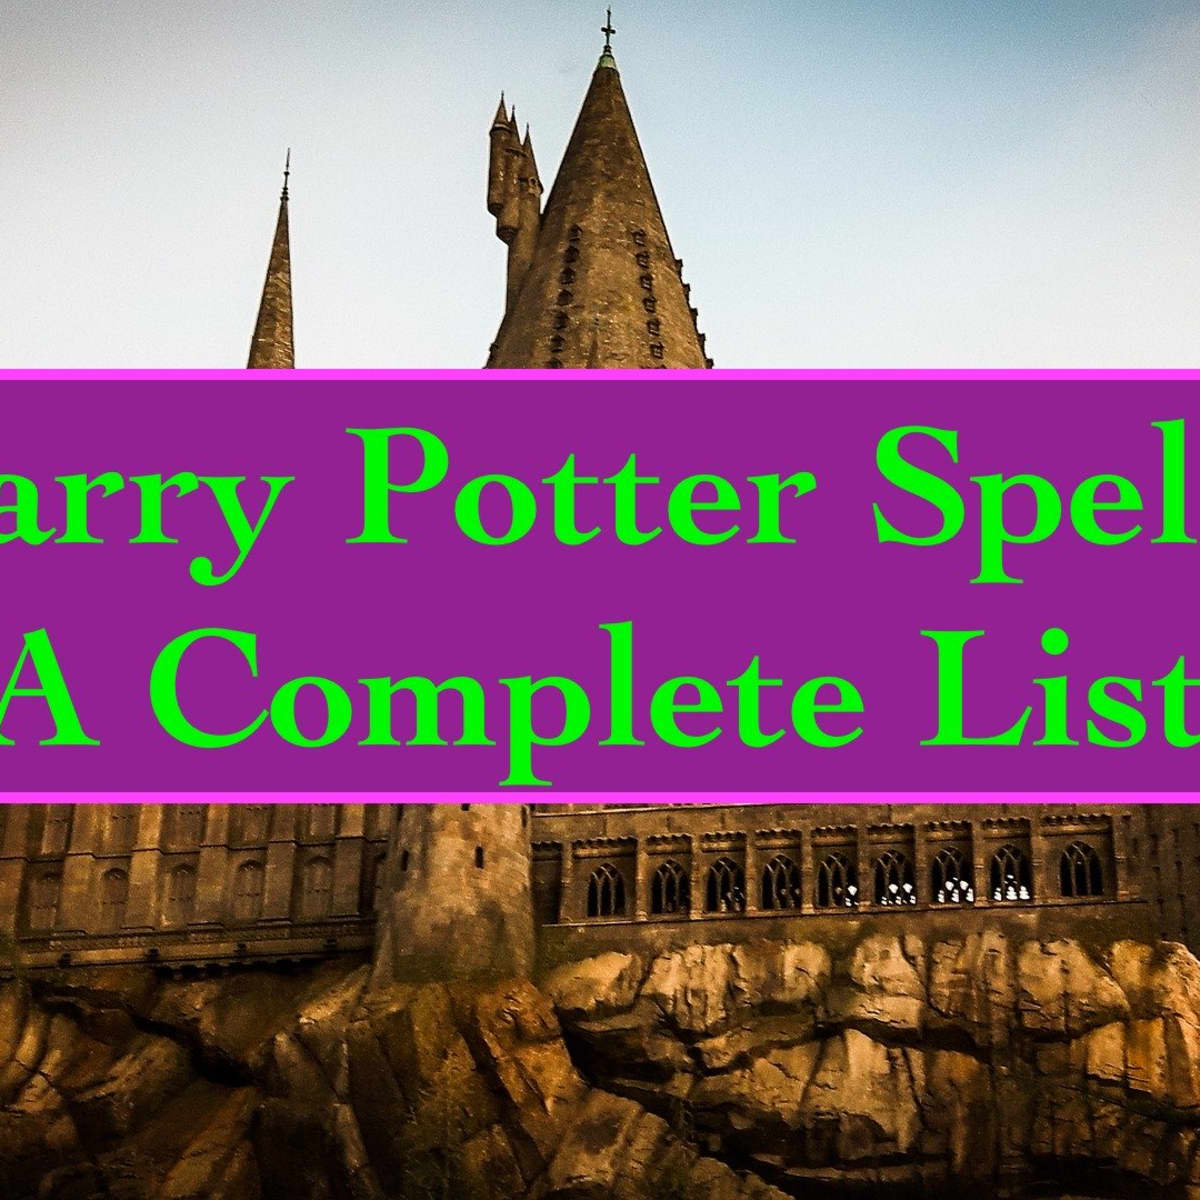 magic spell book harry potter